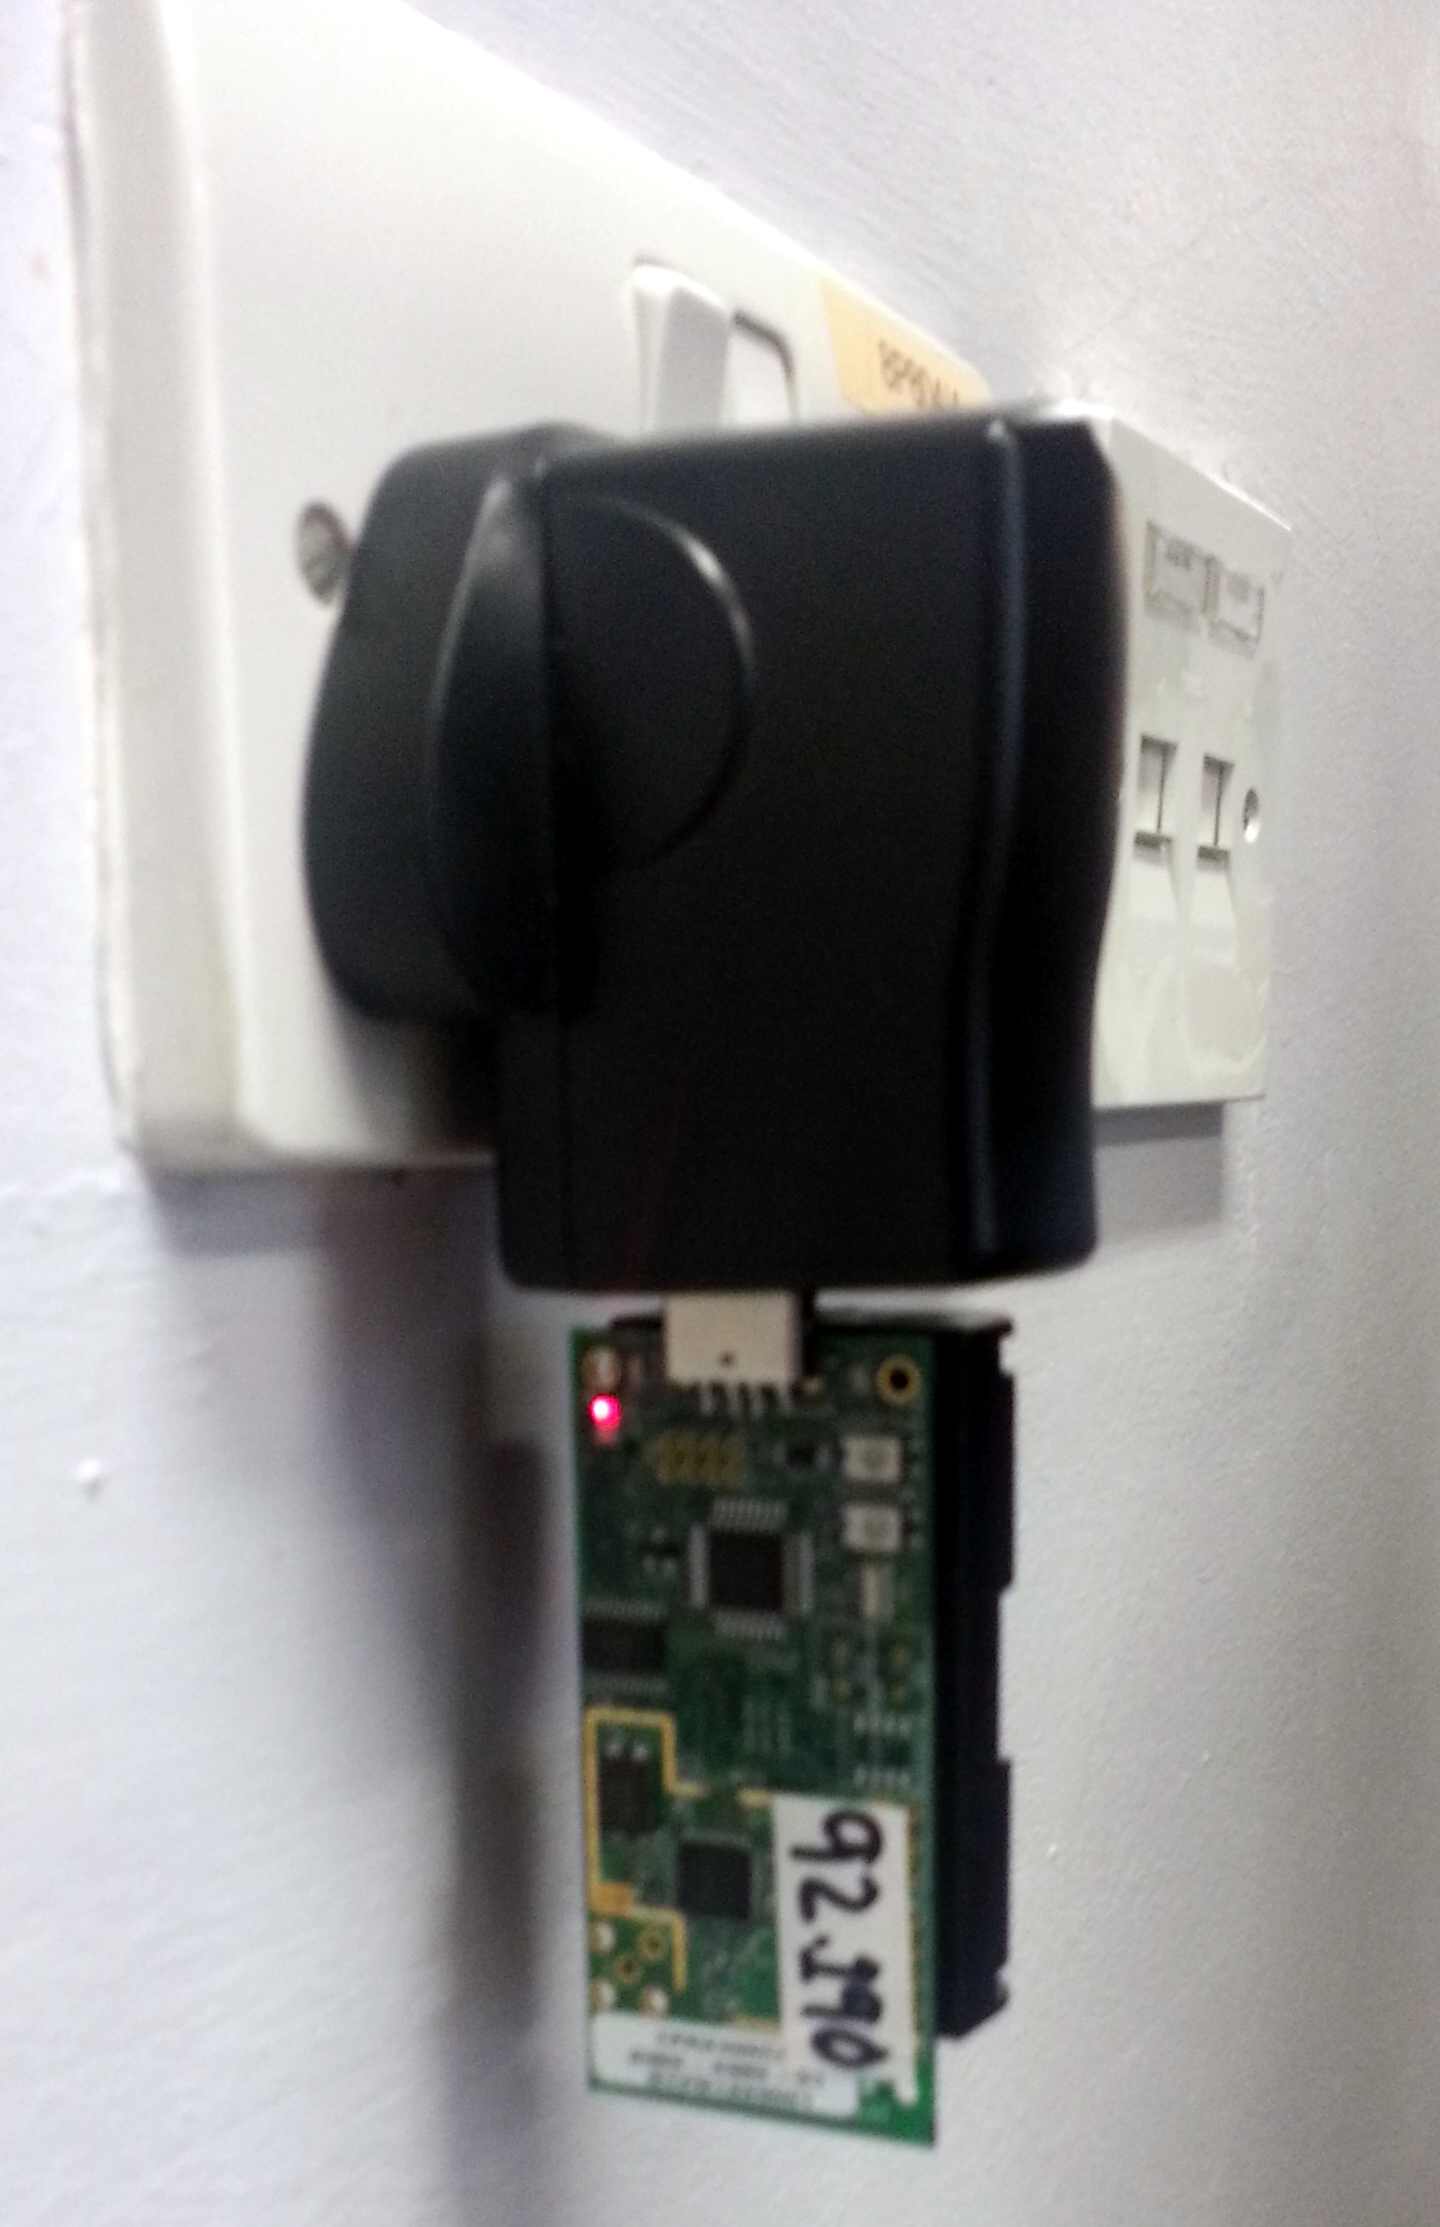 TelosB connected via USB to mains socket